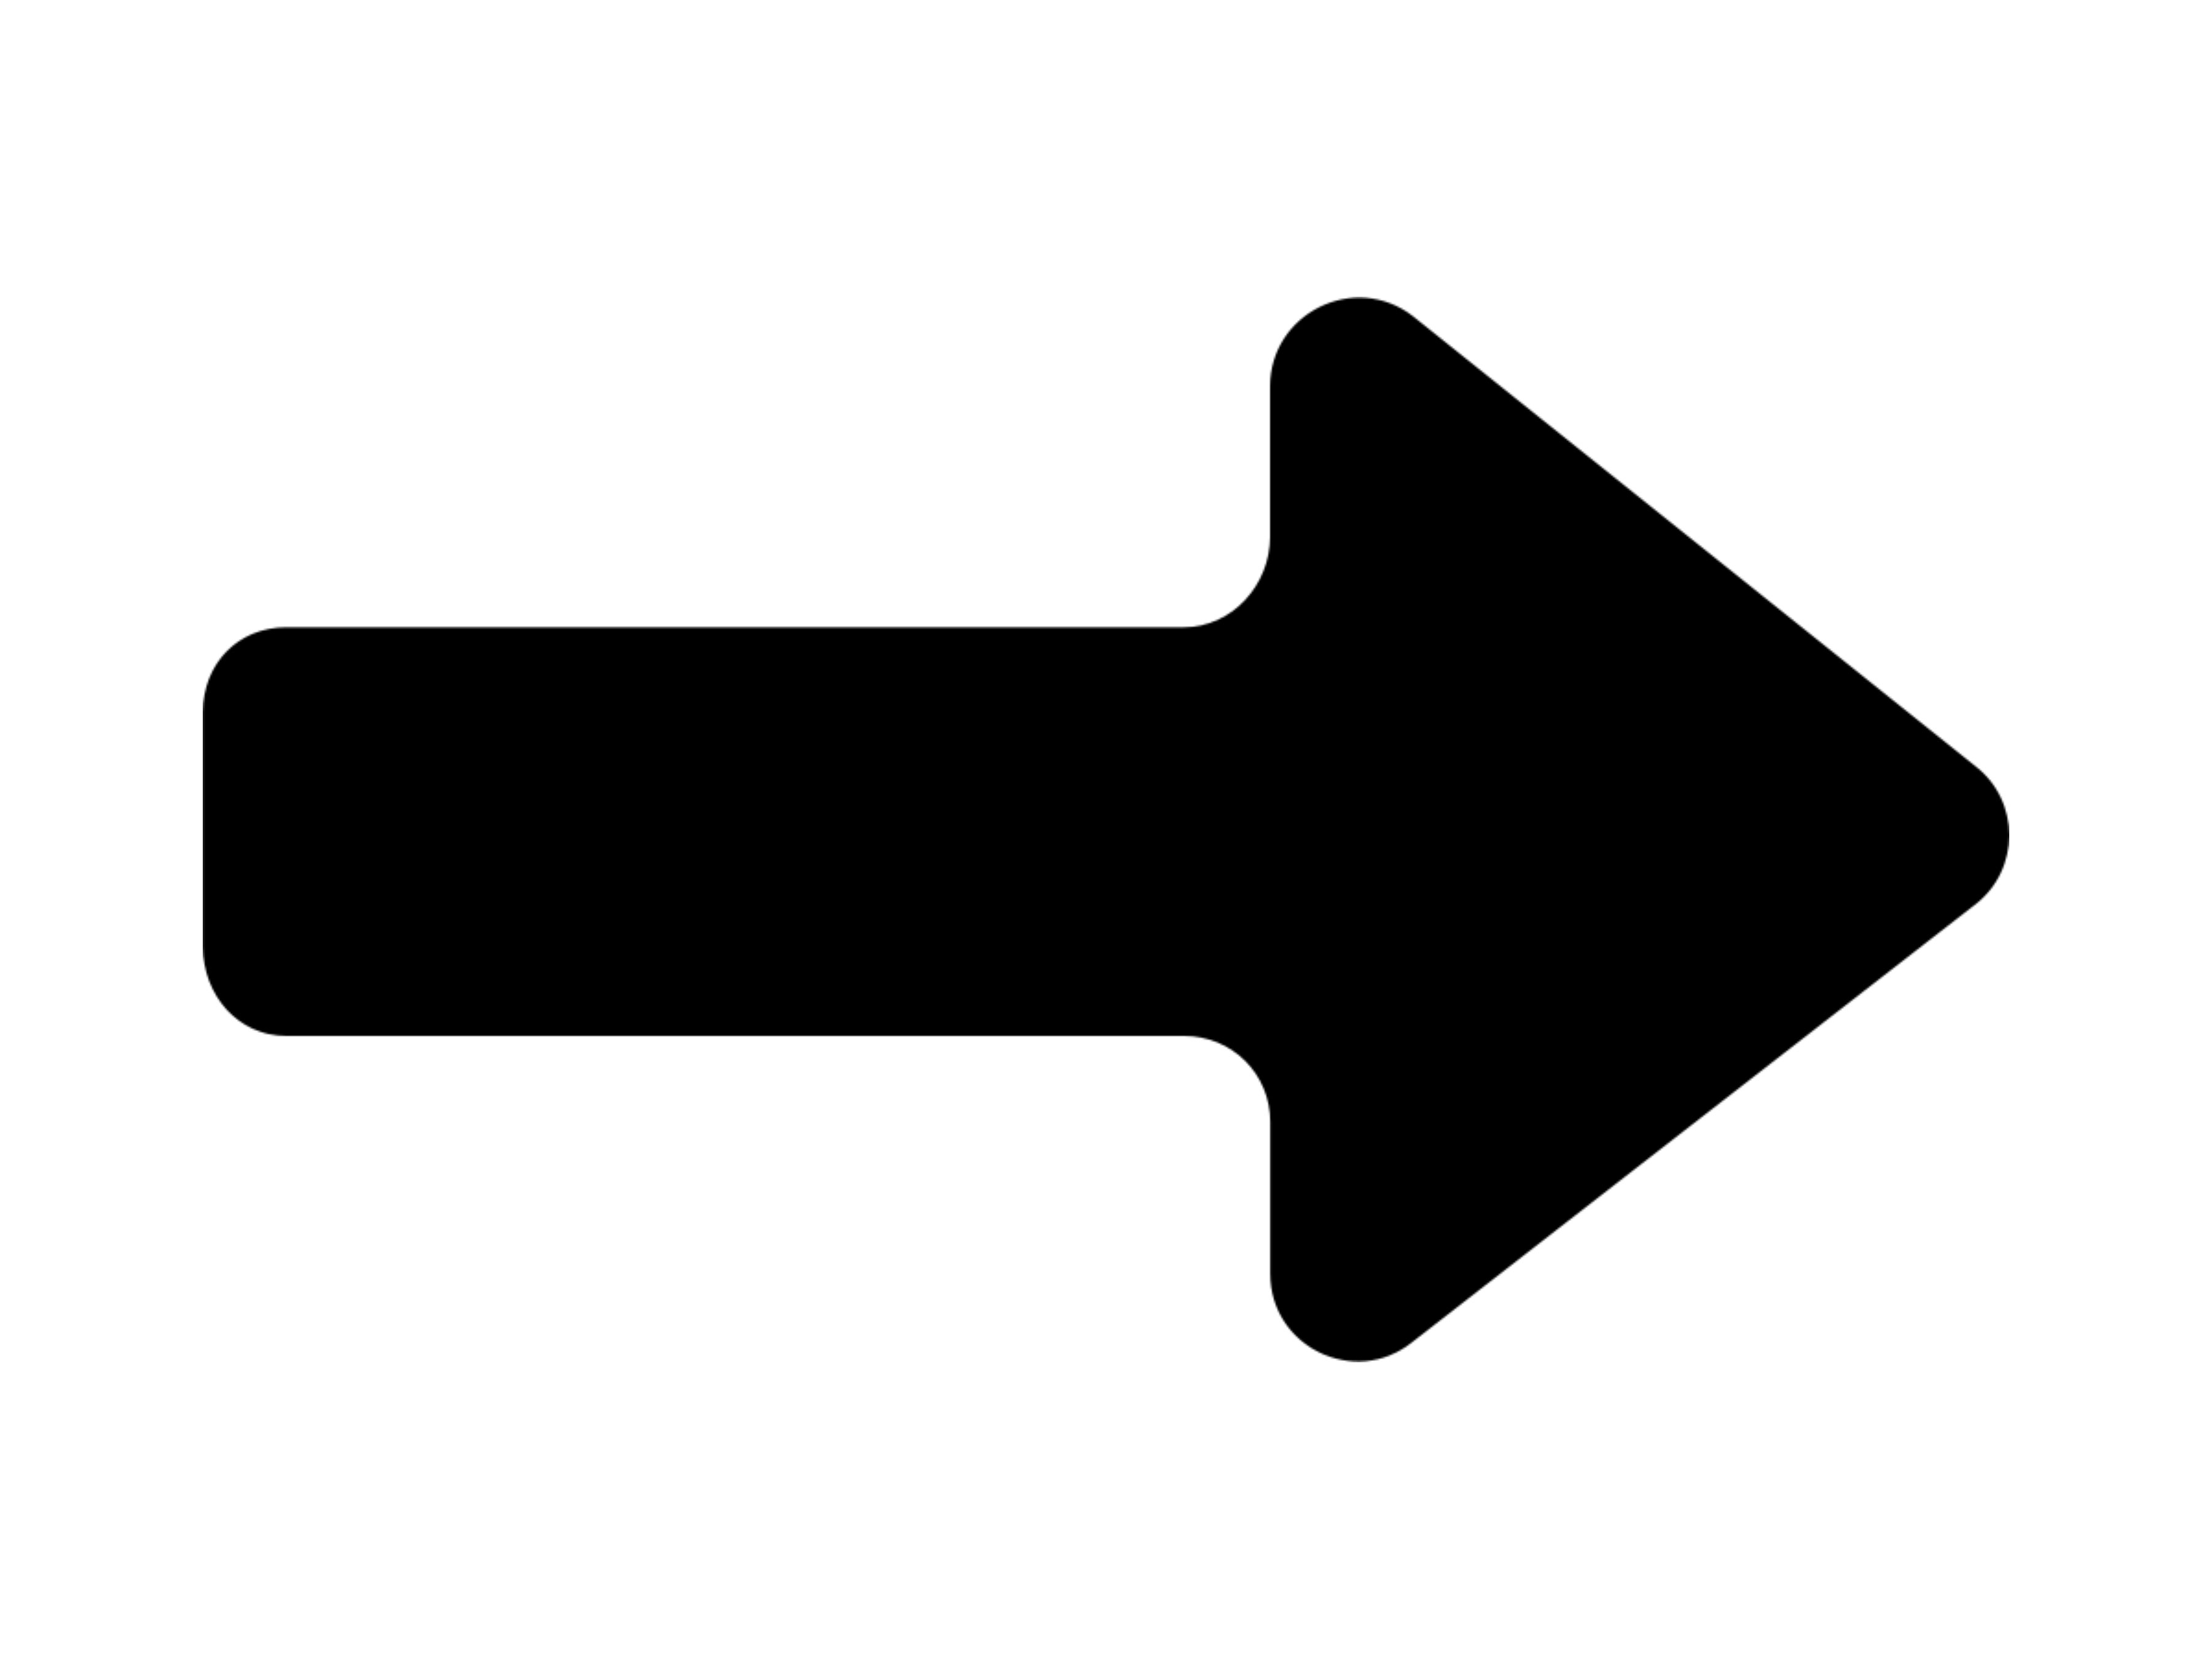  Jeden směr - zleva doprava